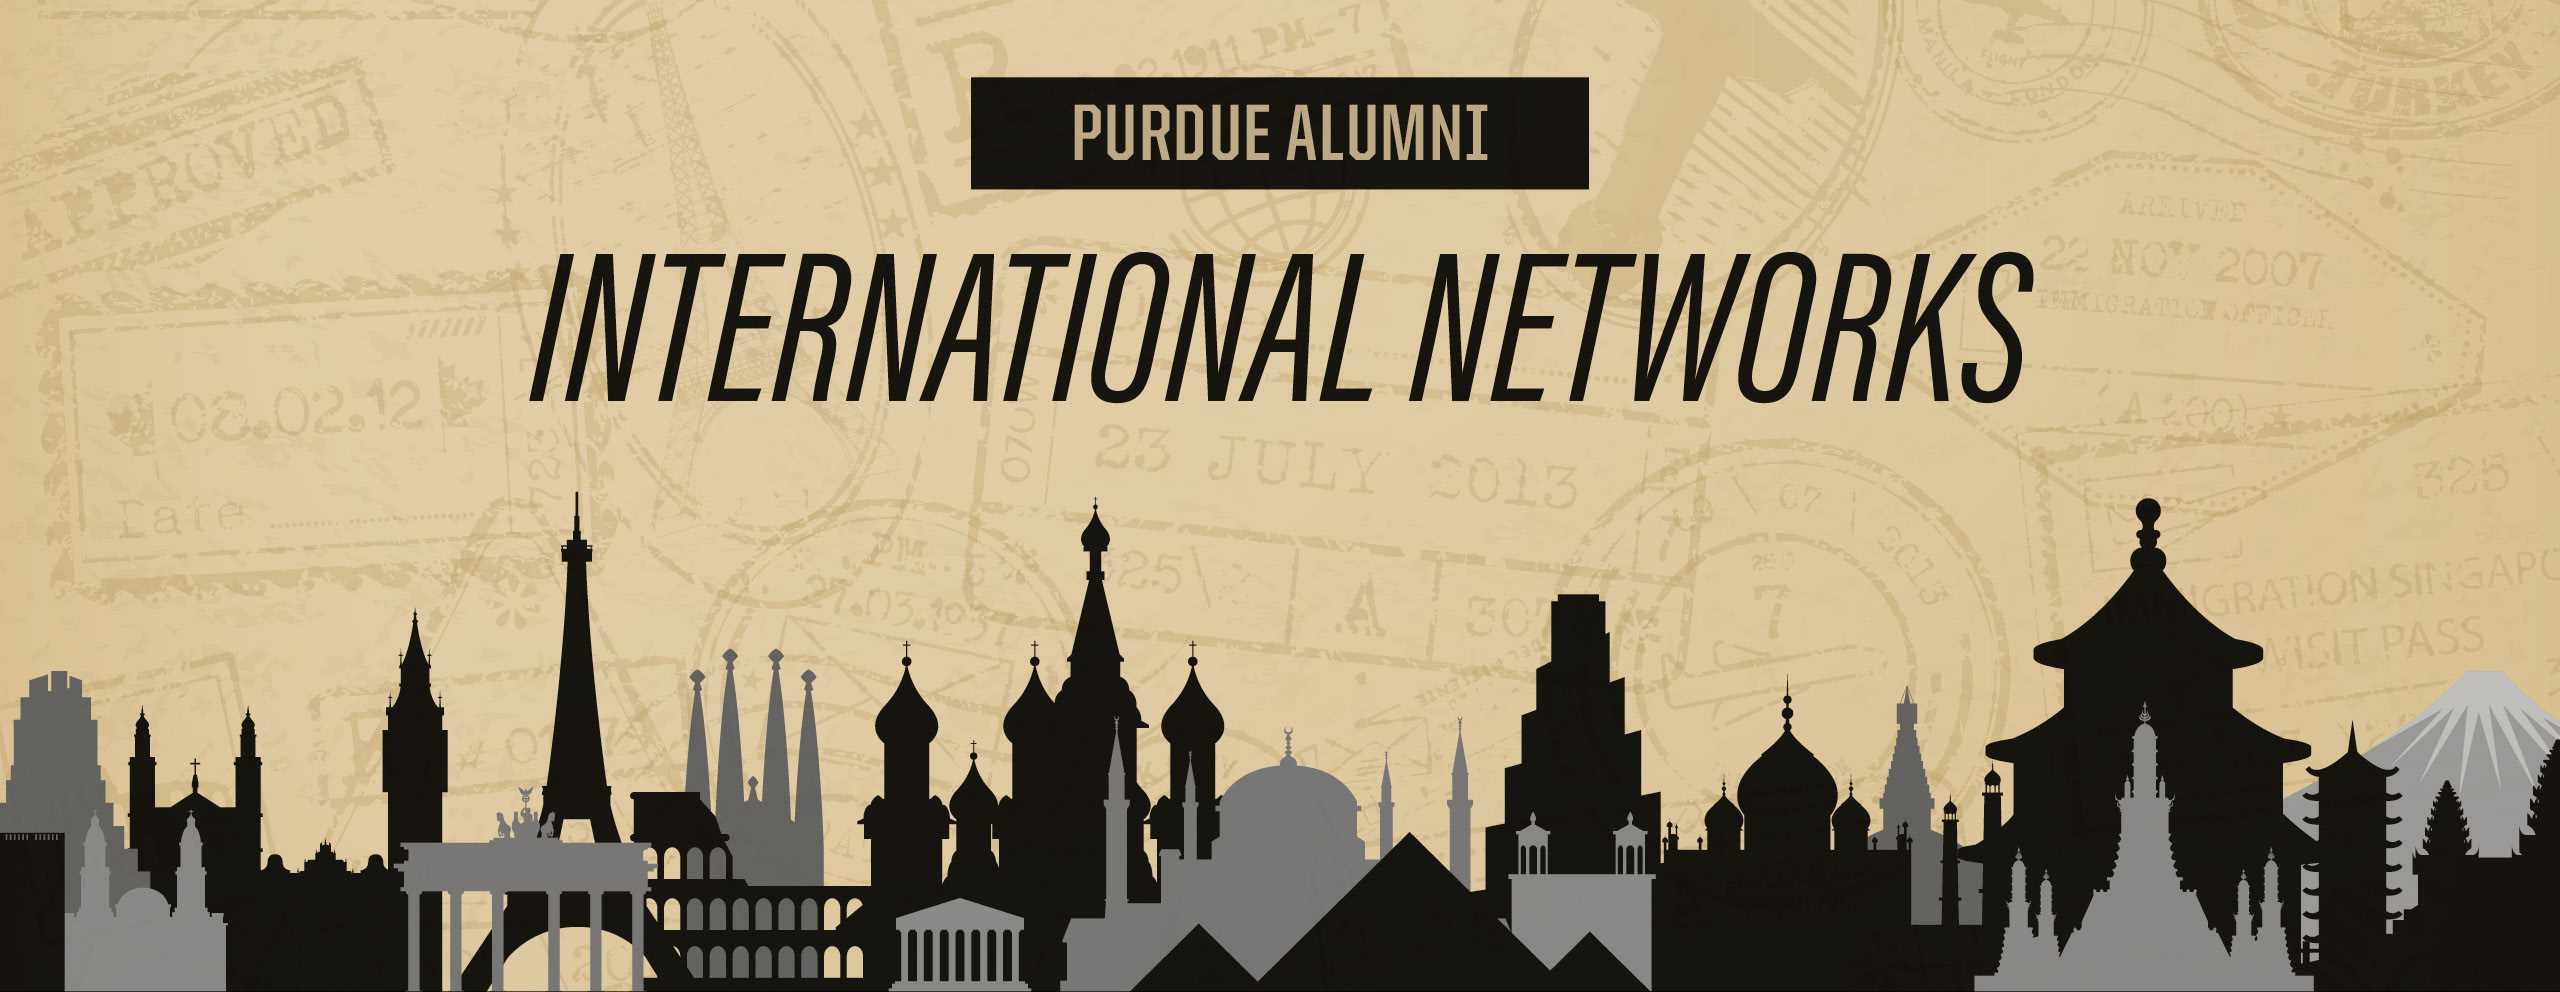 Purdue Alumni International Networks